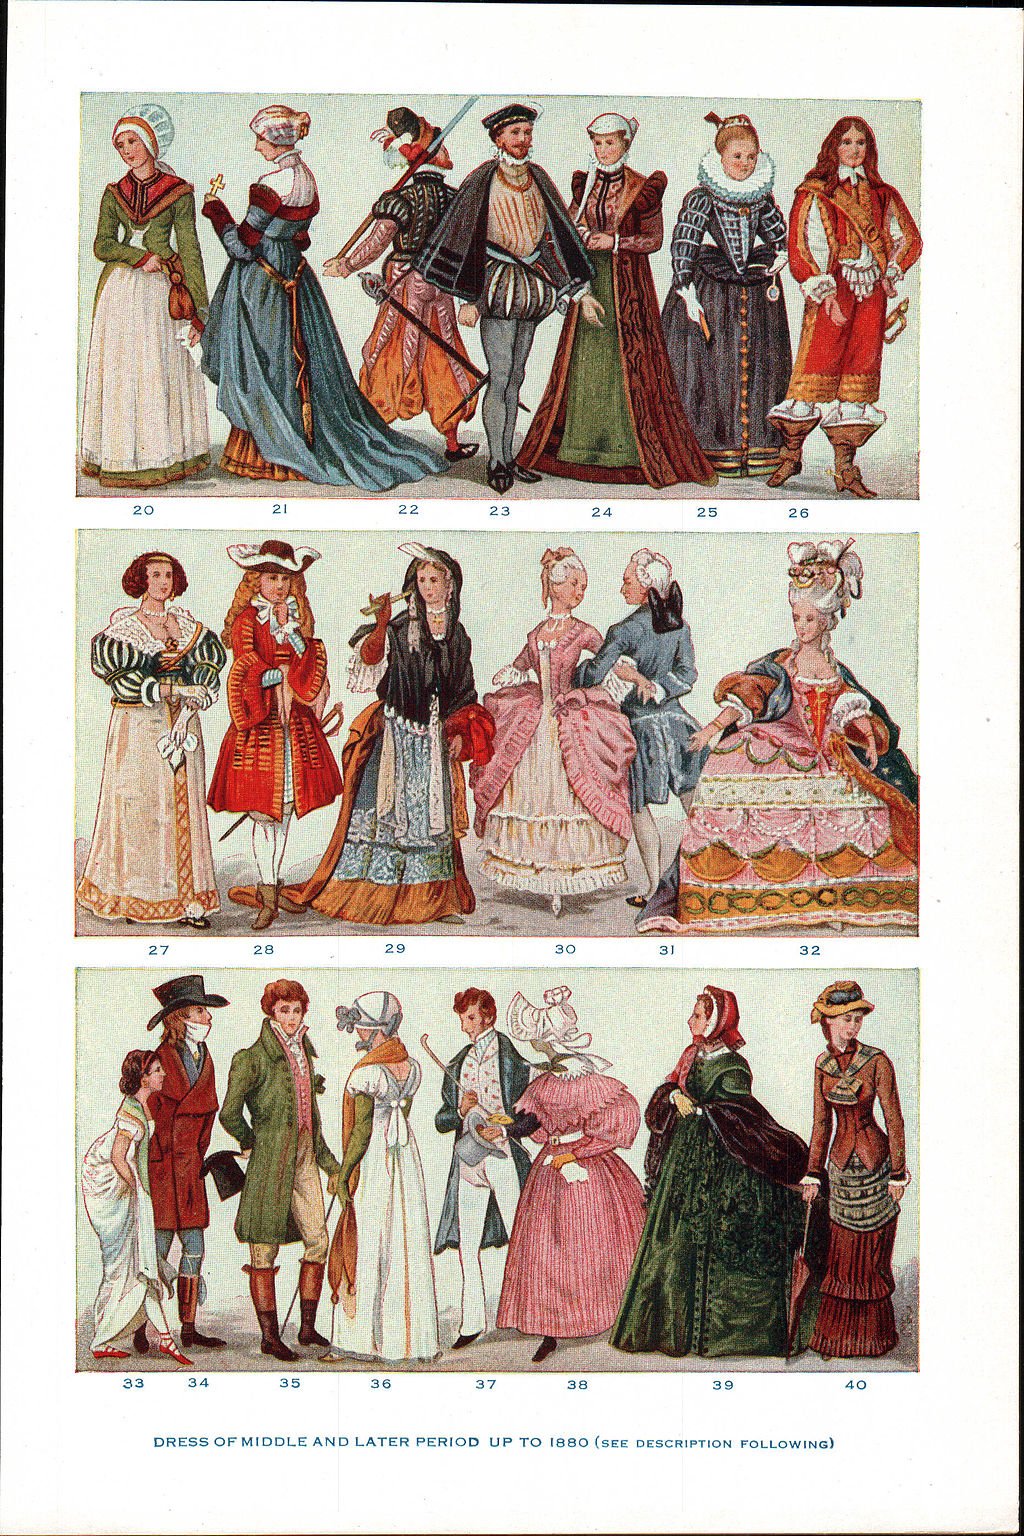 Glamorous Fashion During the 1700s